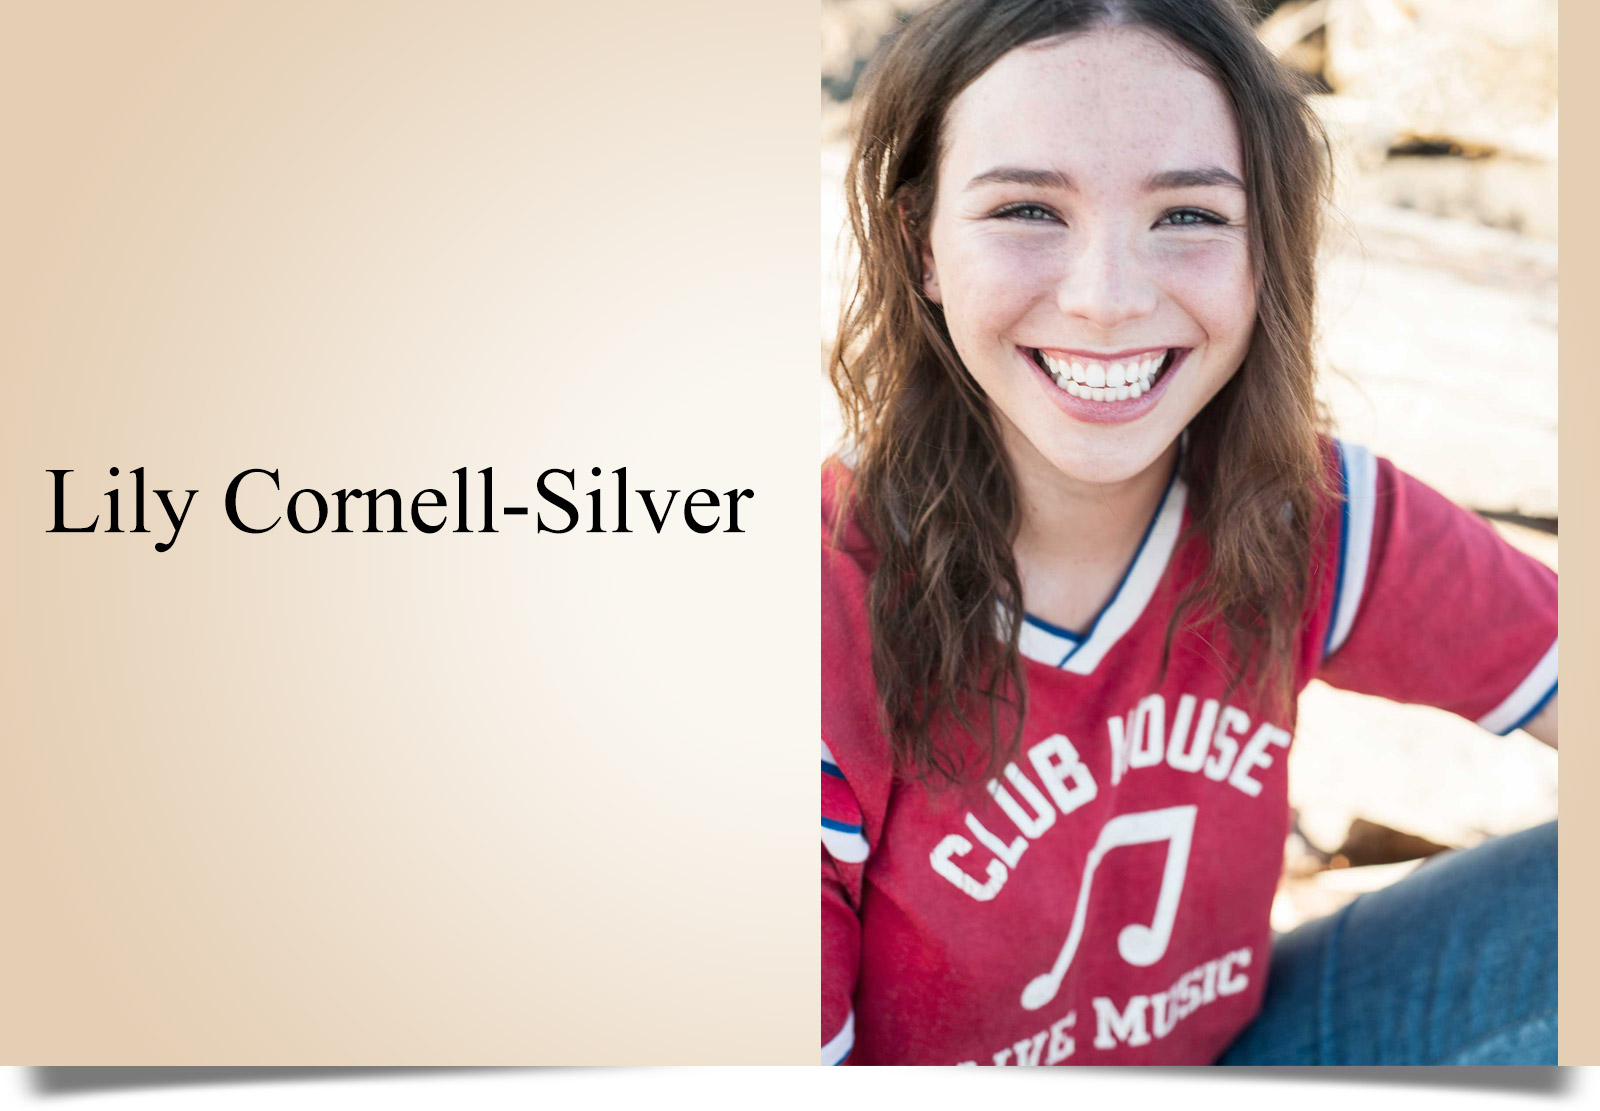 Lily Cornell-Silver